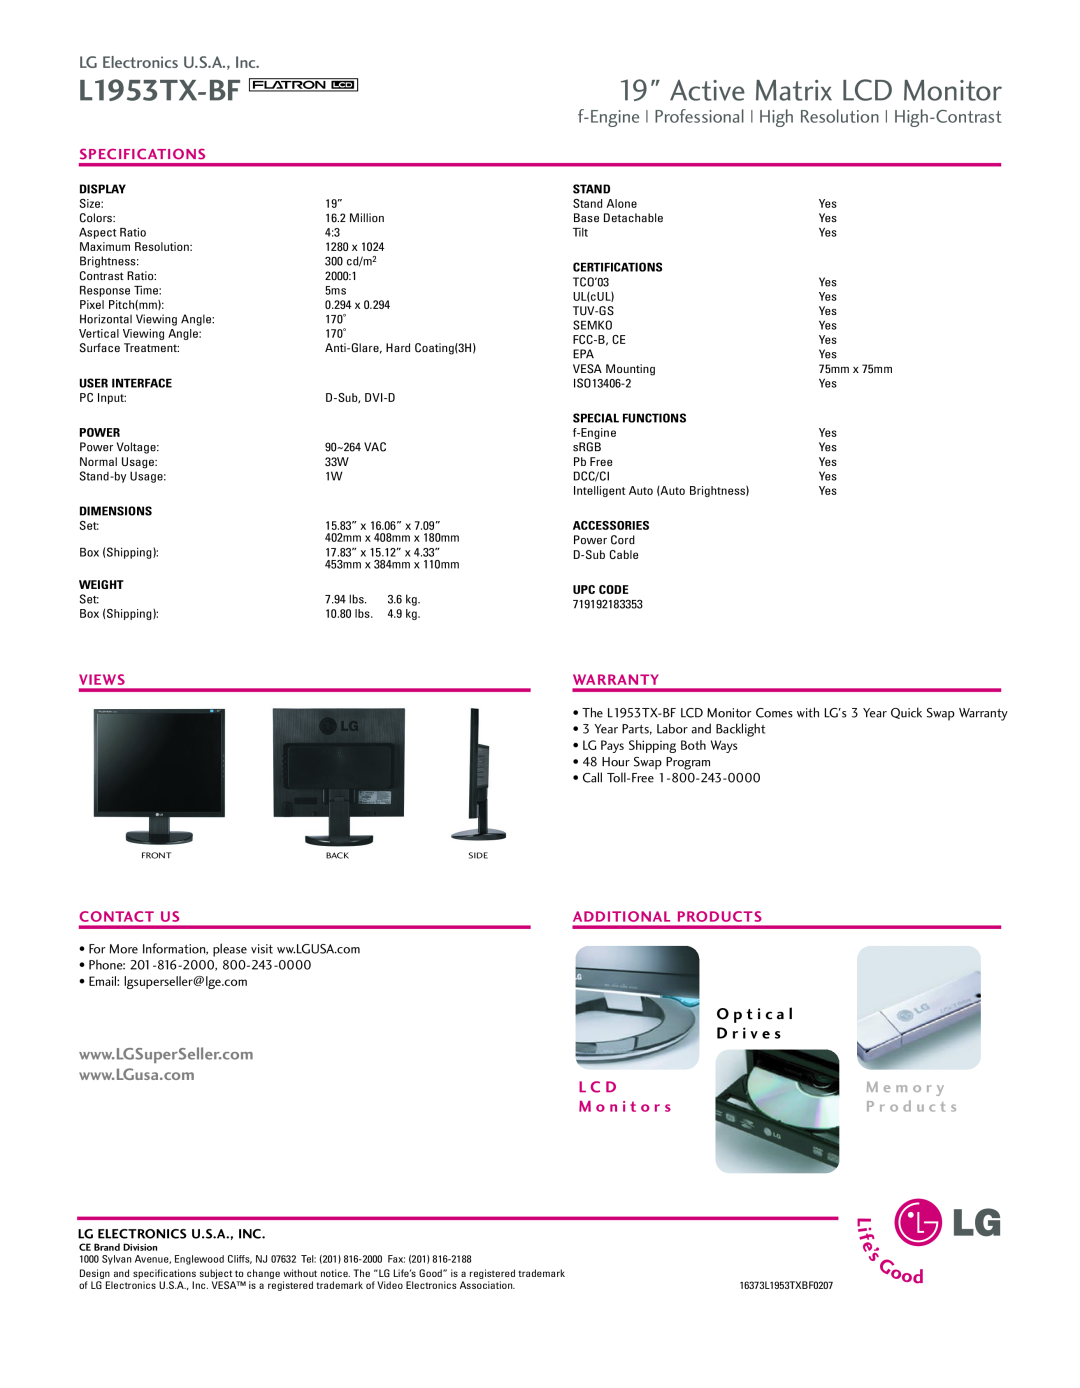 LG Electronics L1953TX-BF, Active Matrix LCD Monitor, f-Engine Professional High Resolution High-Contrast, L C D, Views 